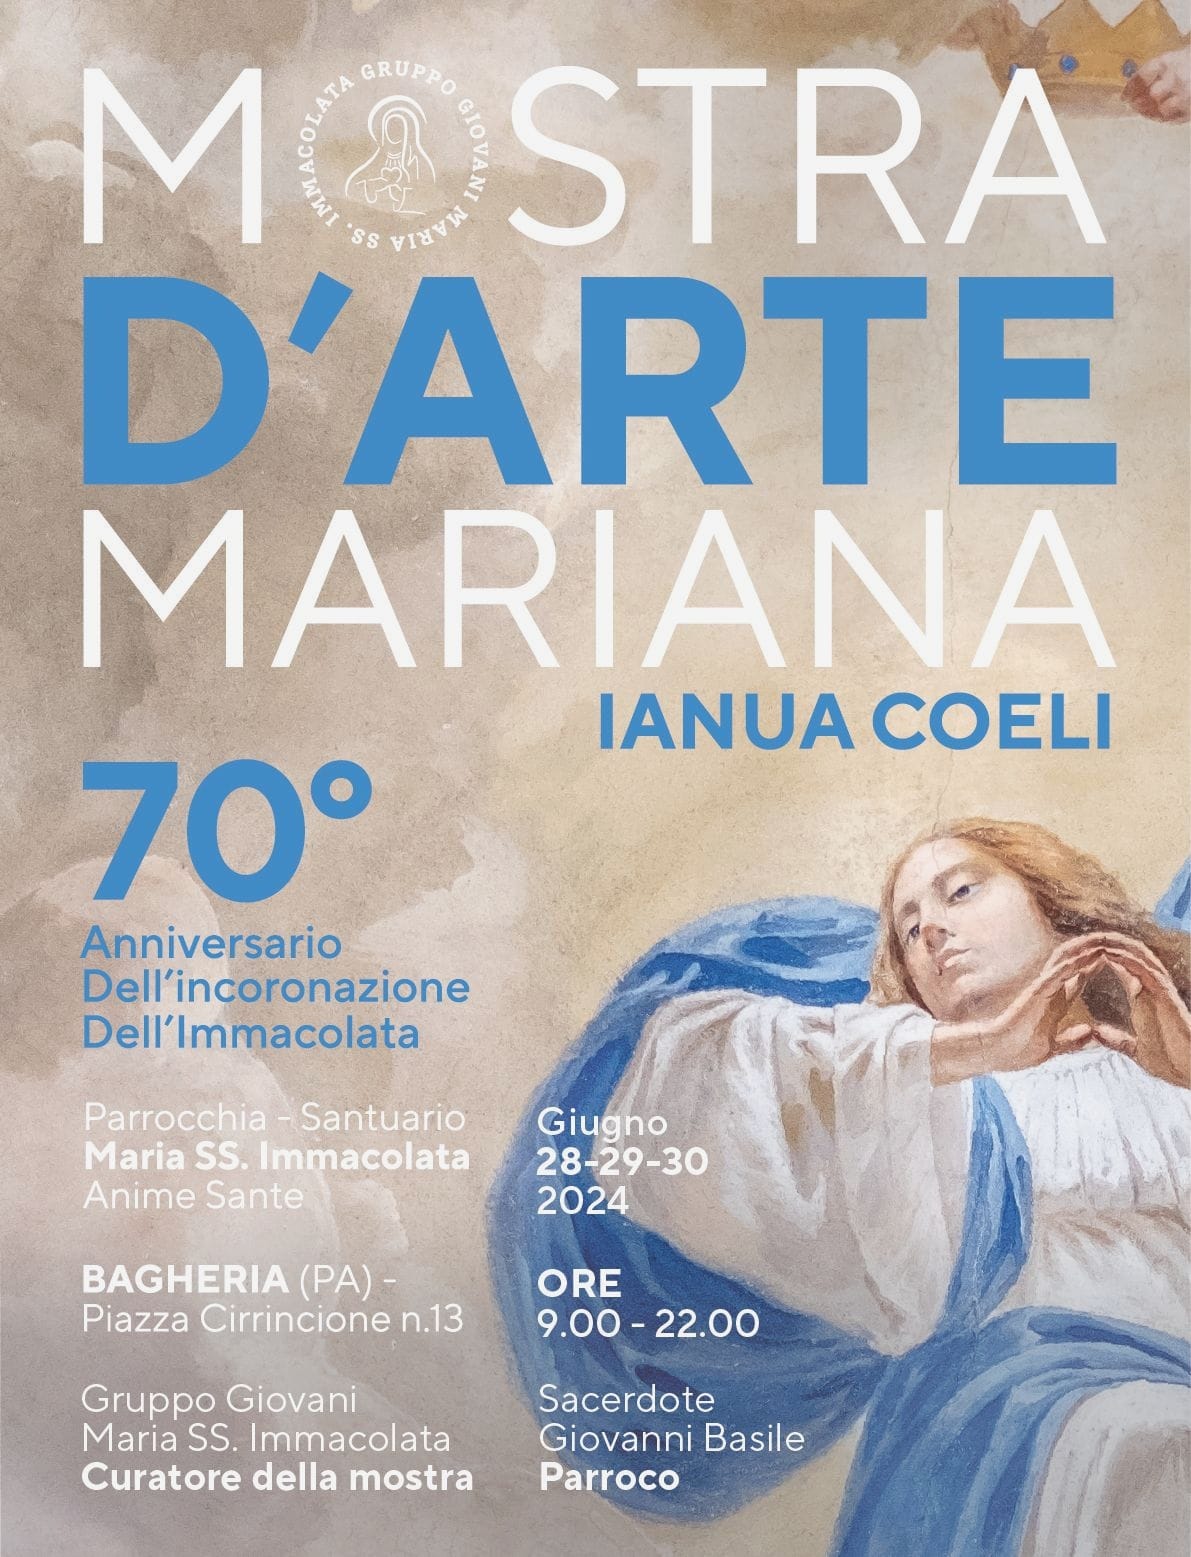 Mostra d'arte Mariana "Ianua coeli" presso il Santuario Maria SS. Immacolata.